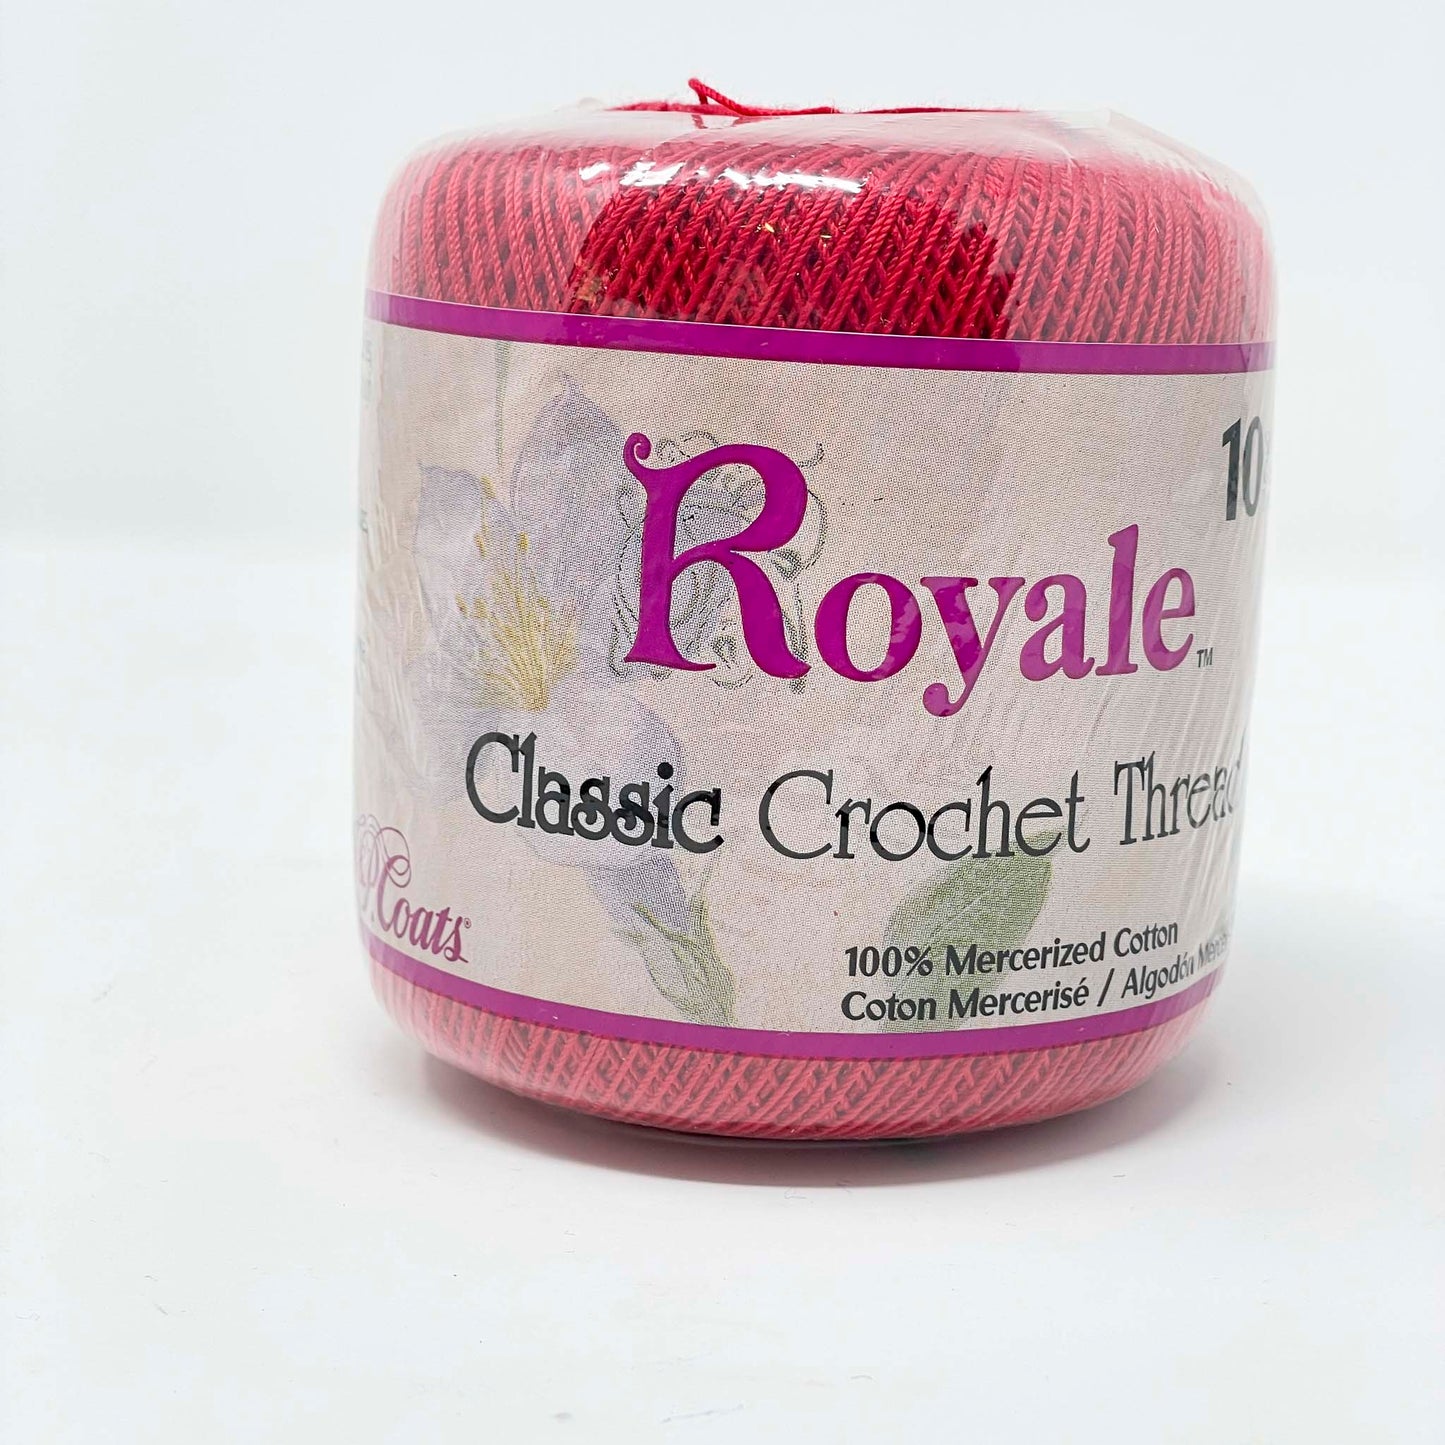 Royale Classic Crochet Thread - Size 10